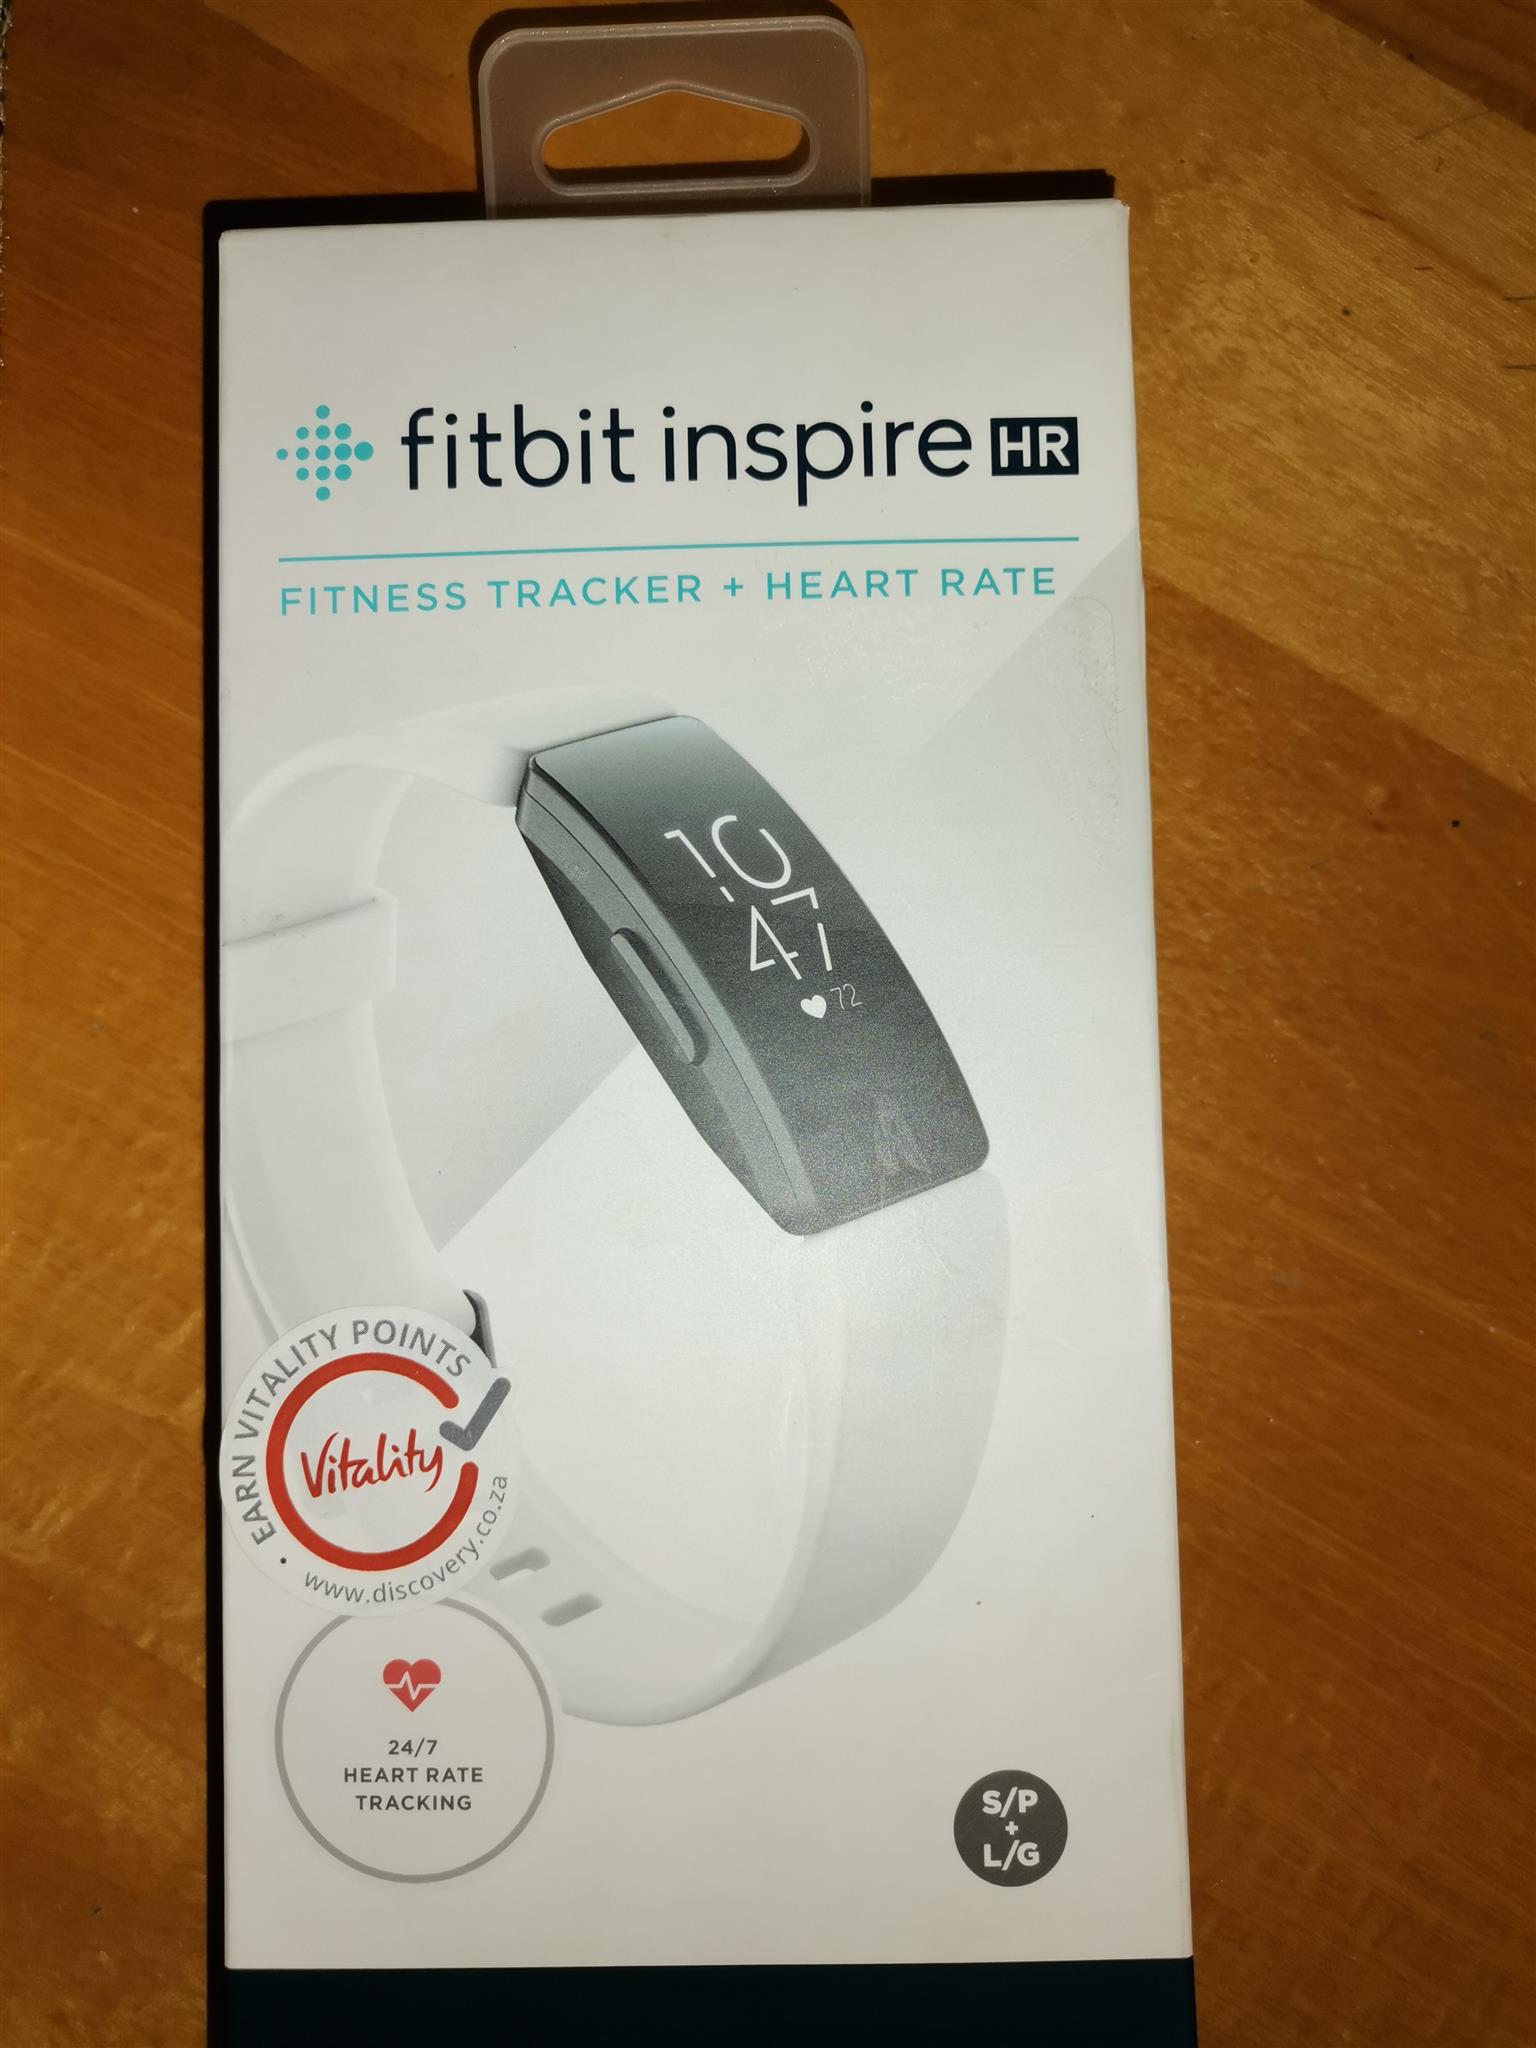 Fitbit inspire HR | Junk Mail